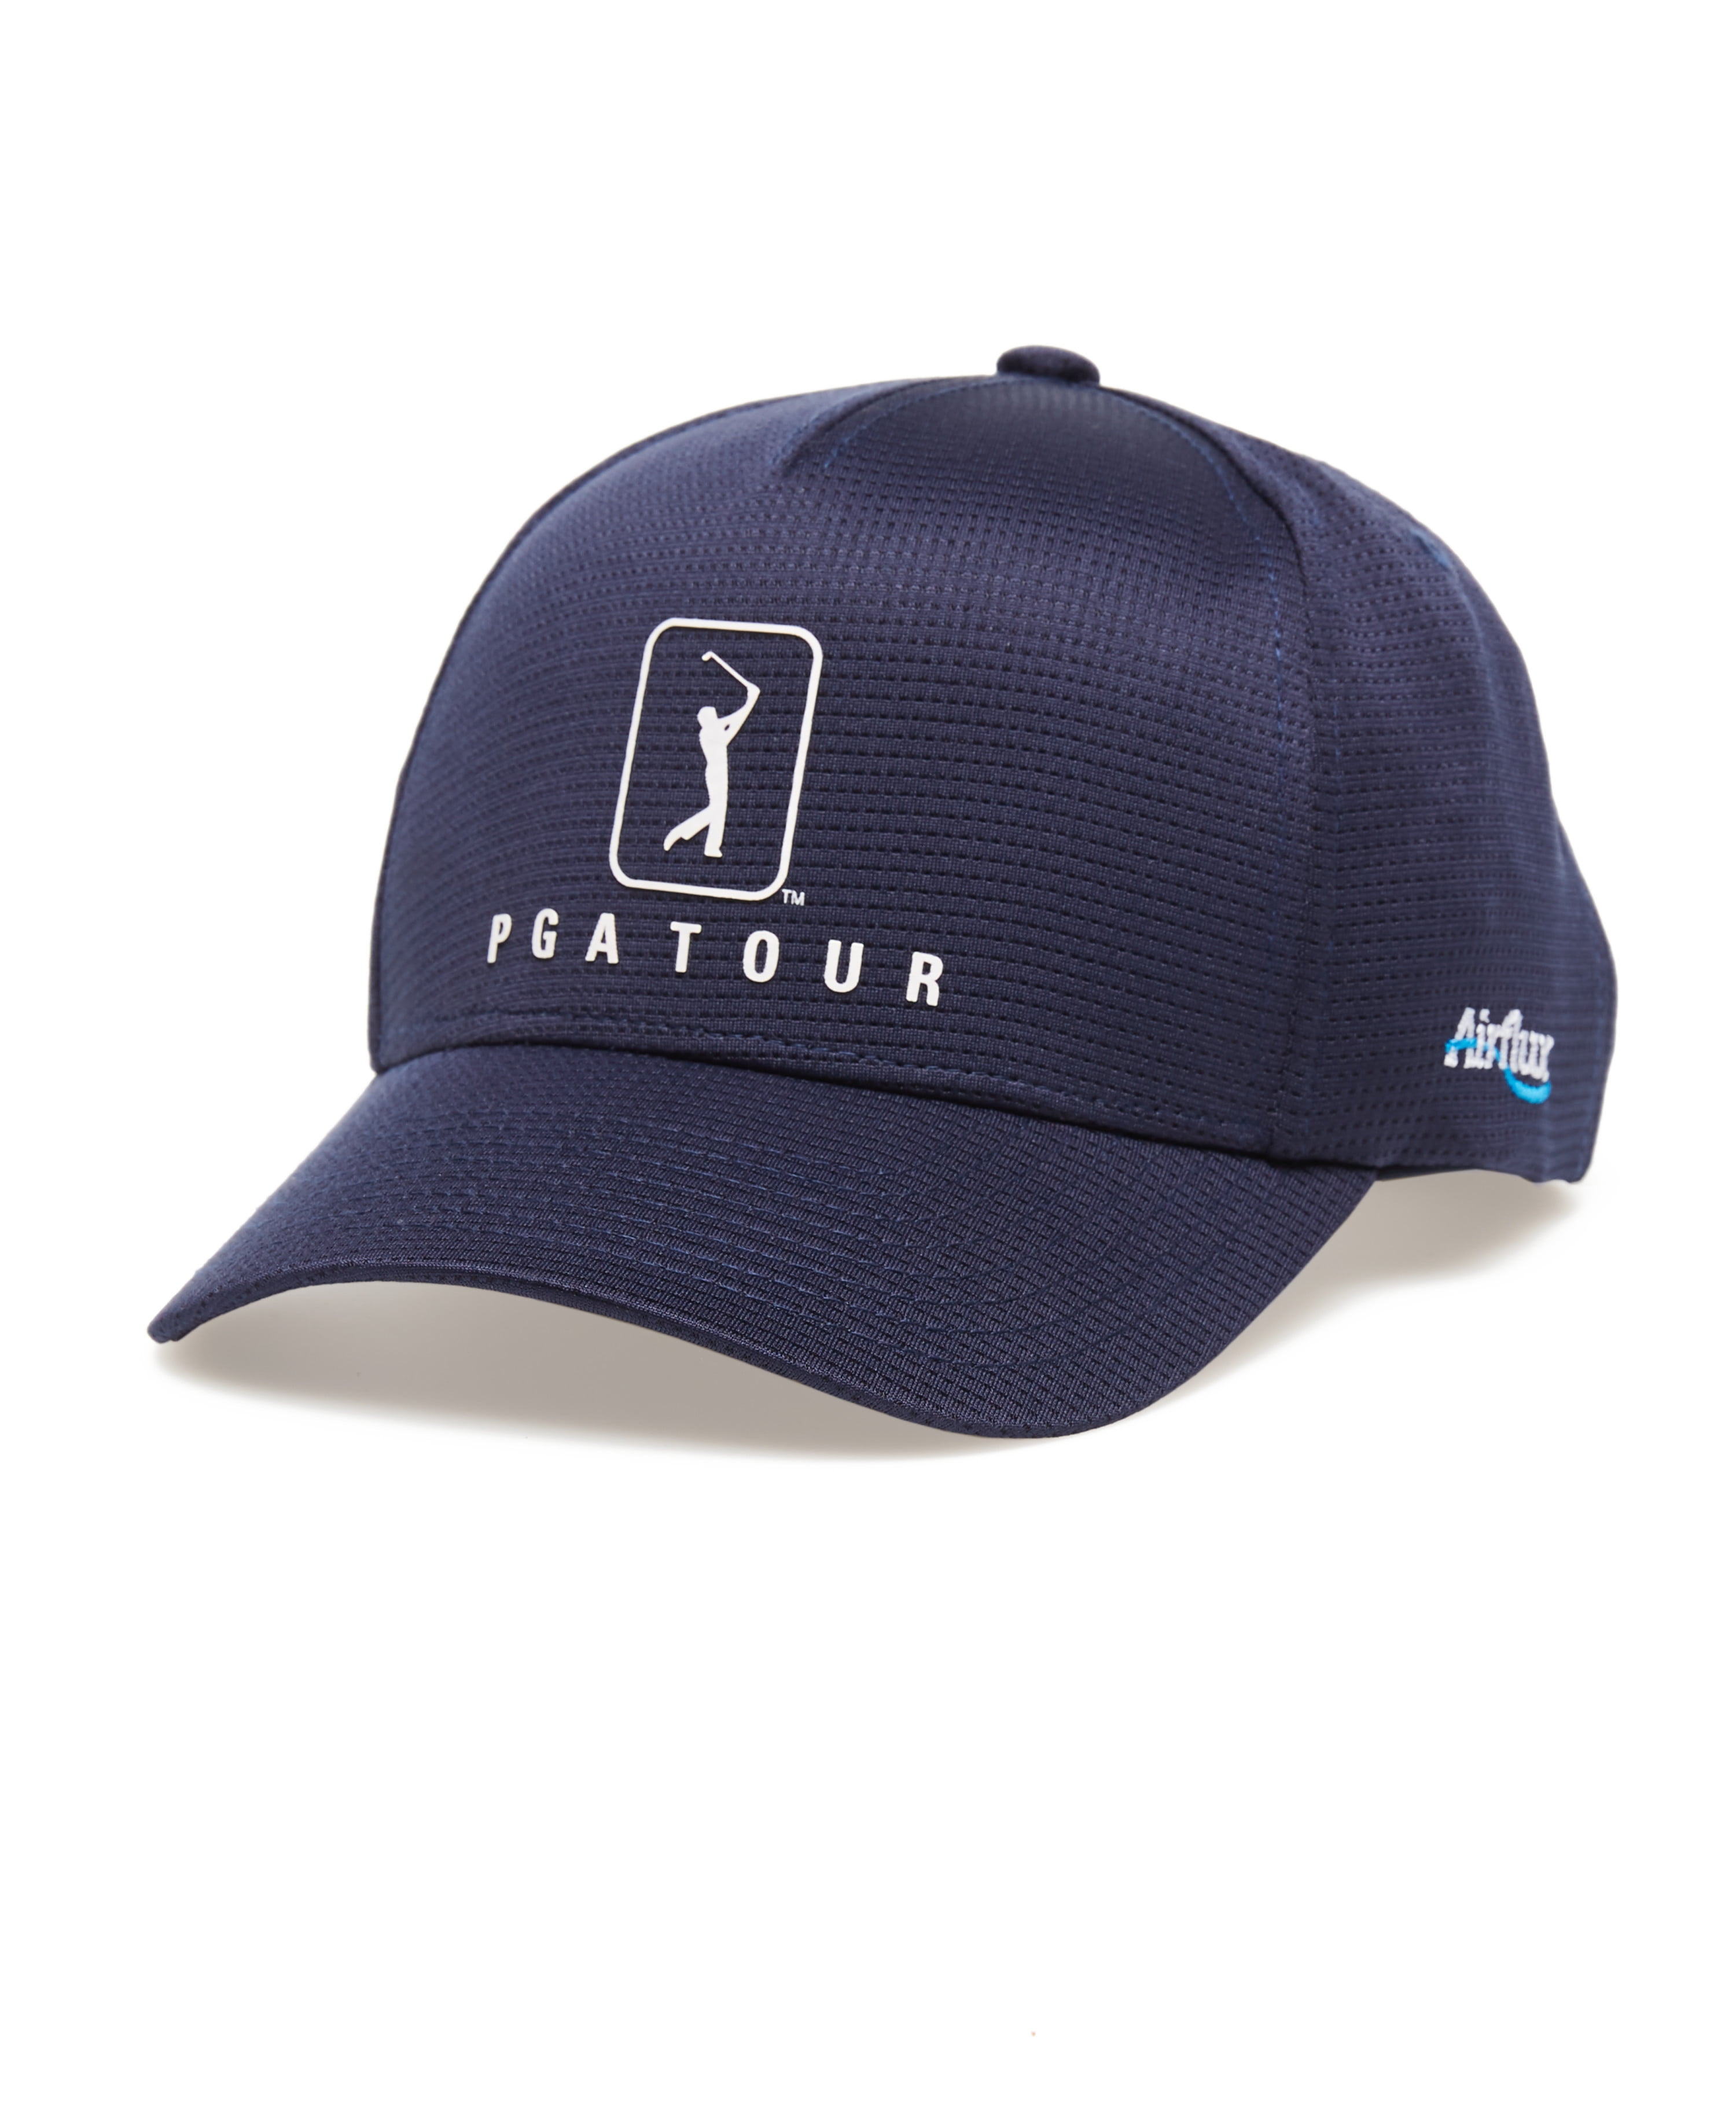 PGA TOUR Airflux Mesh Golf Hat, Navy